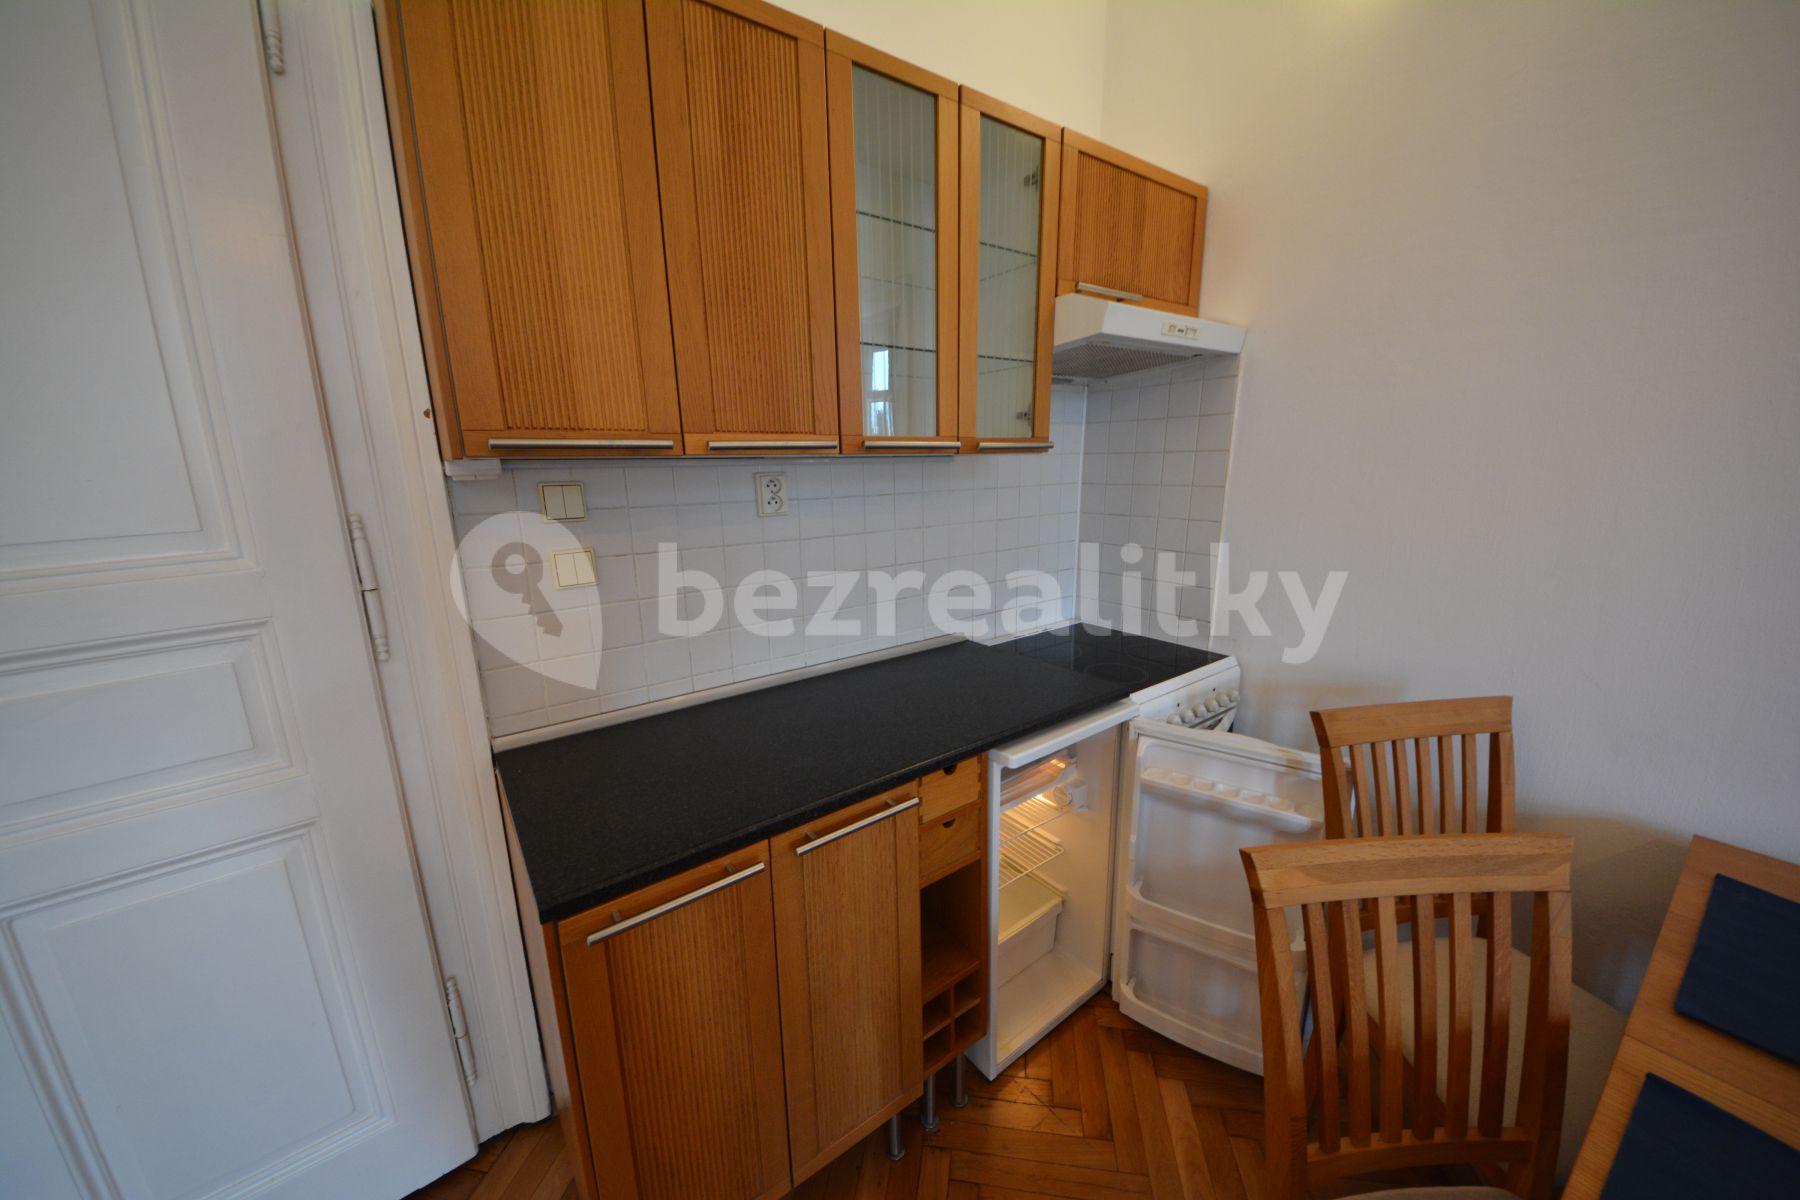 1 bedroom with open-plan kitchen flat to rent, 43 m², Šaldova, Prague, Prague